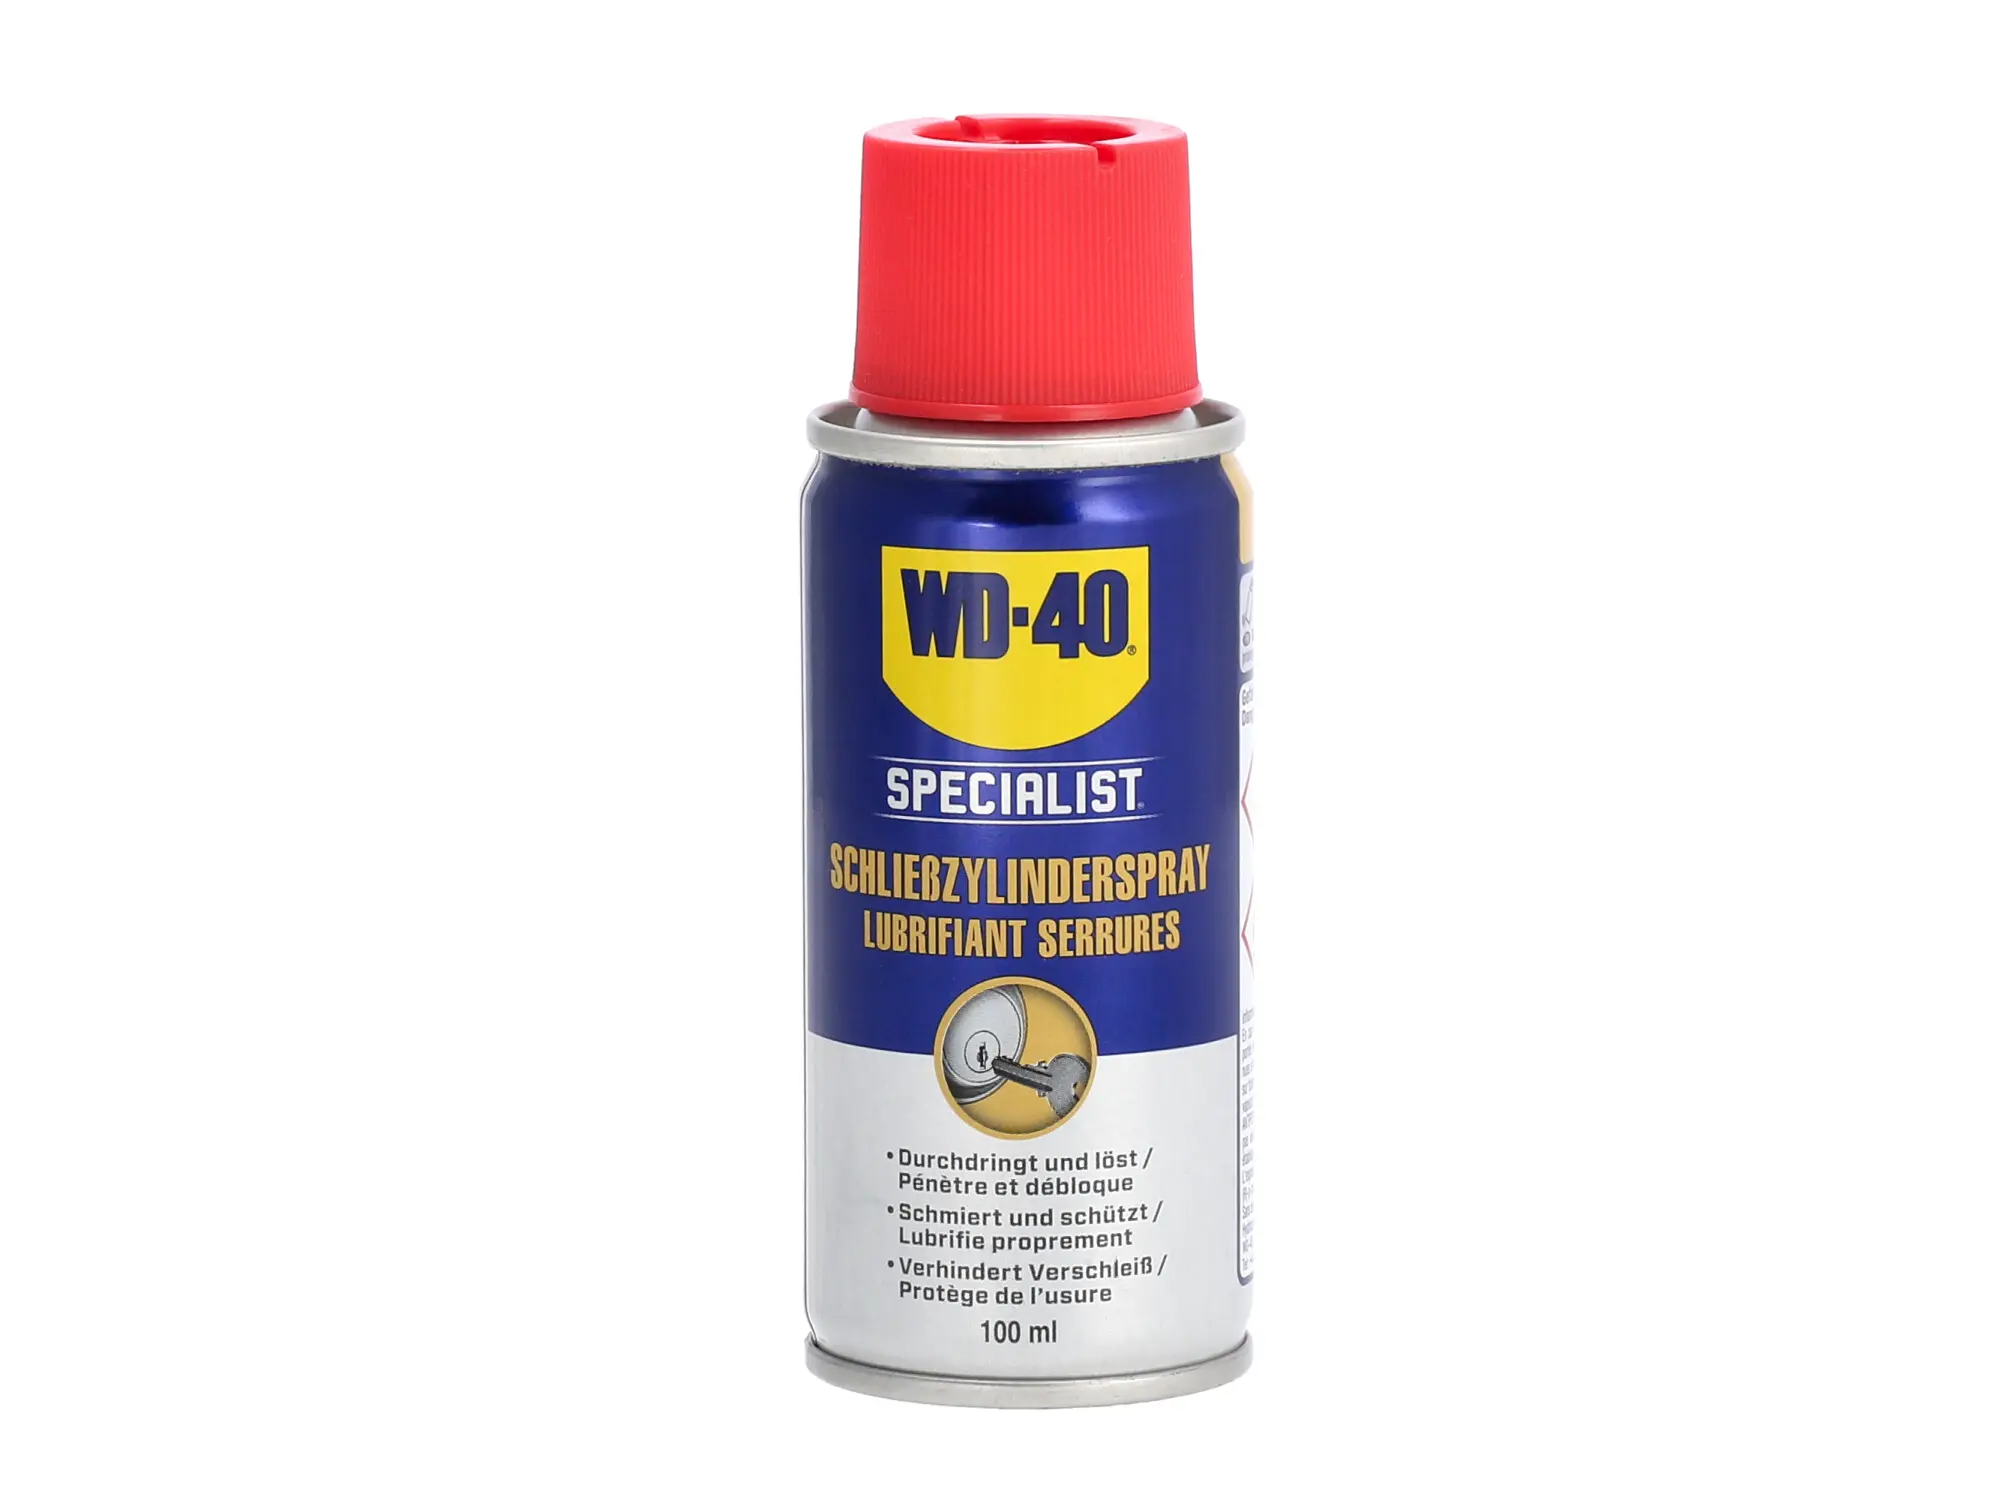 WD-40 SPECIALIST Schließzylinderspray Spraydose - 100ml, Item no: 10076706 - Image 1